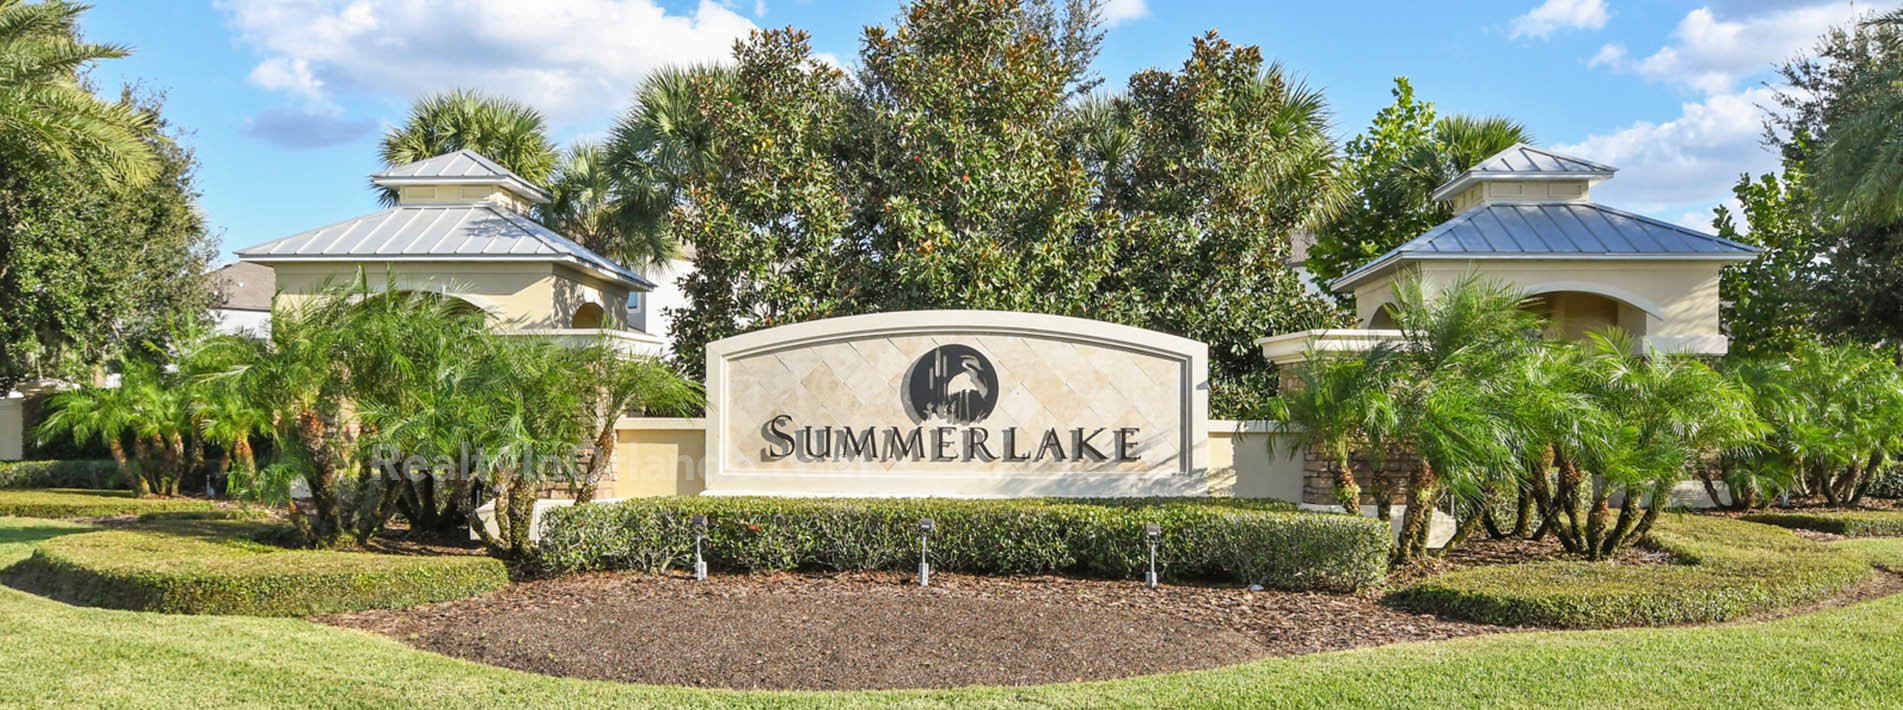 Summerlake Real Estate